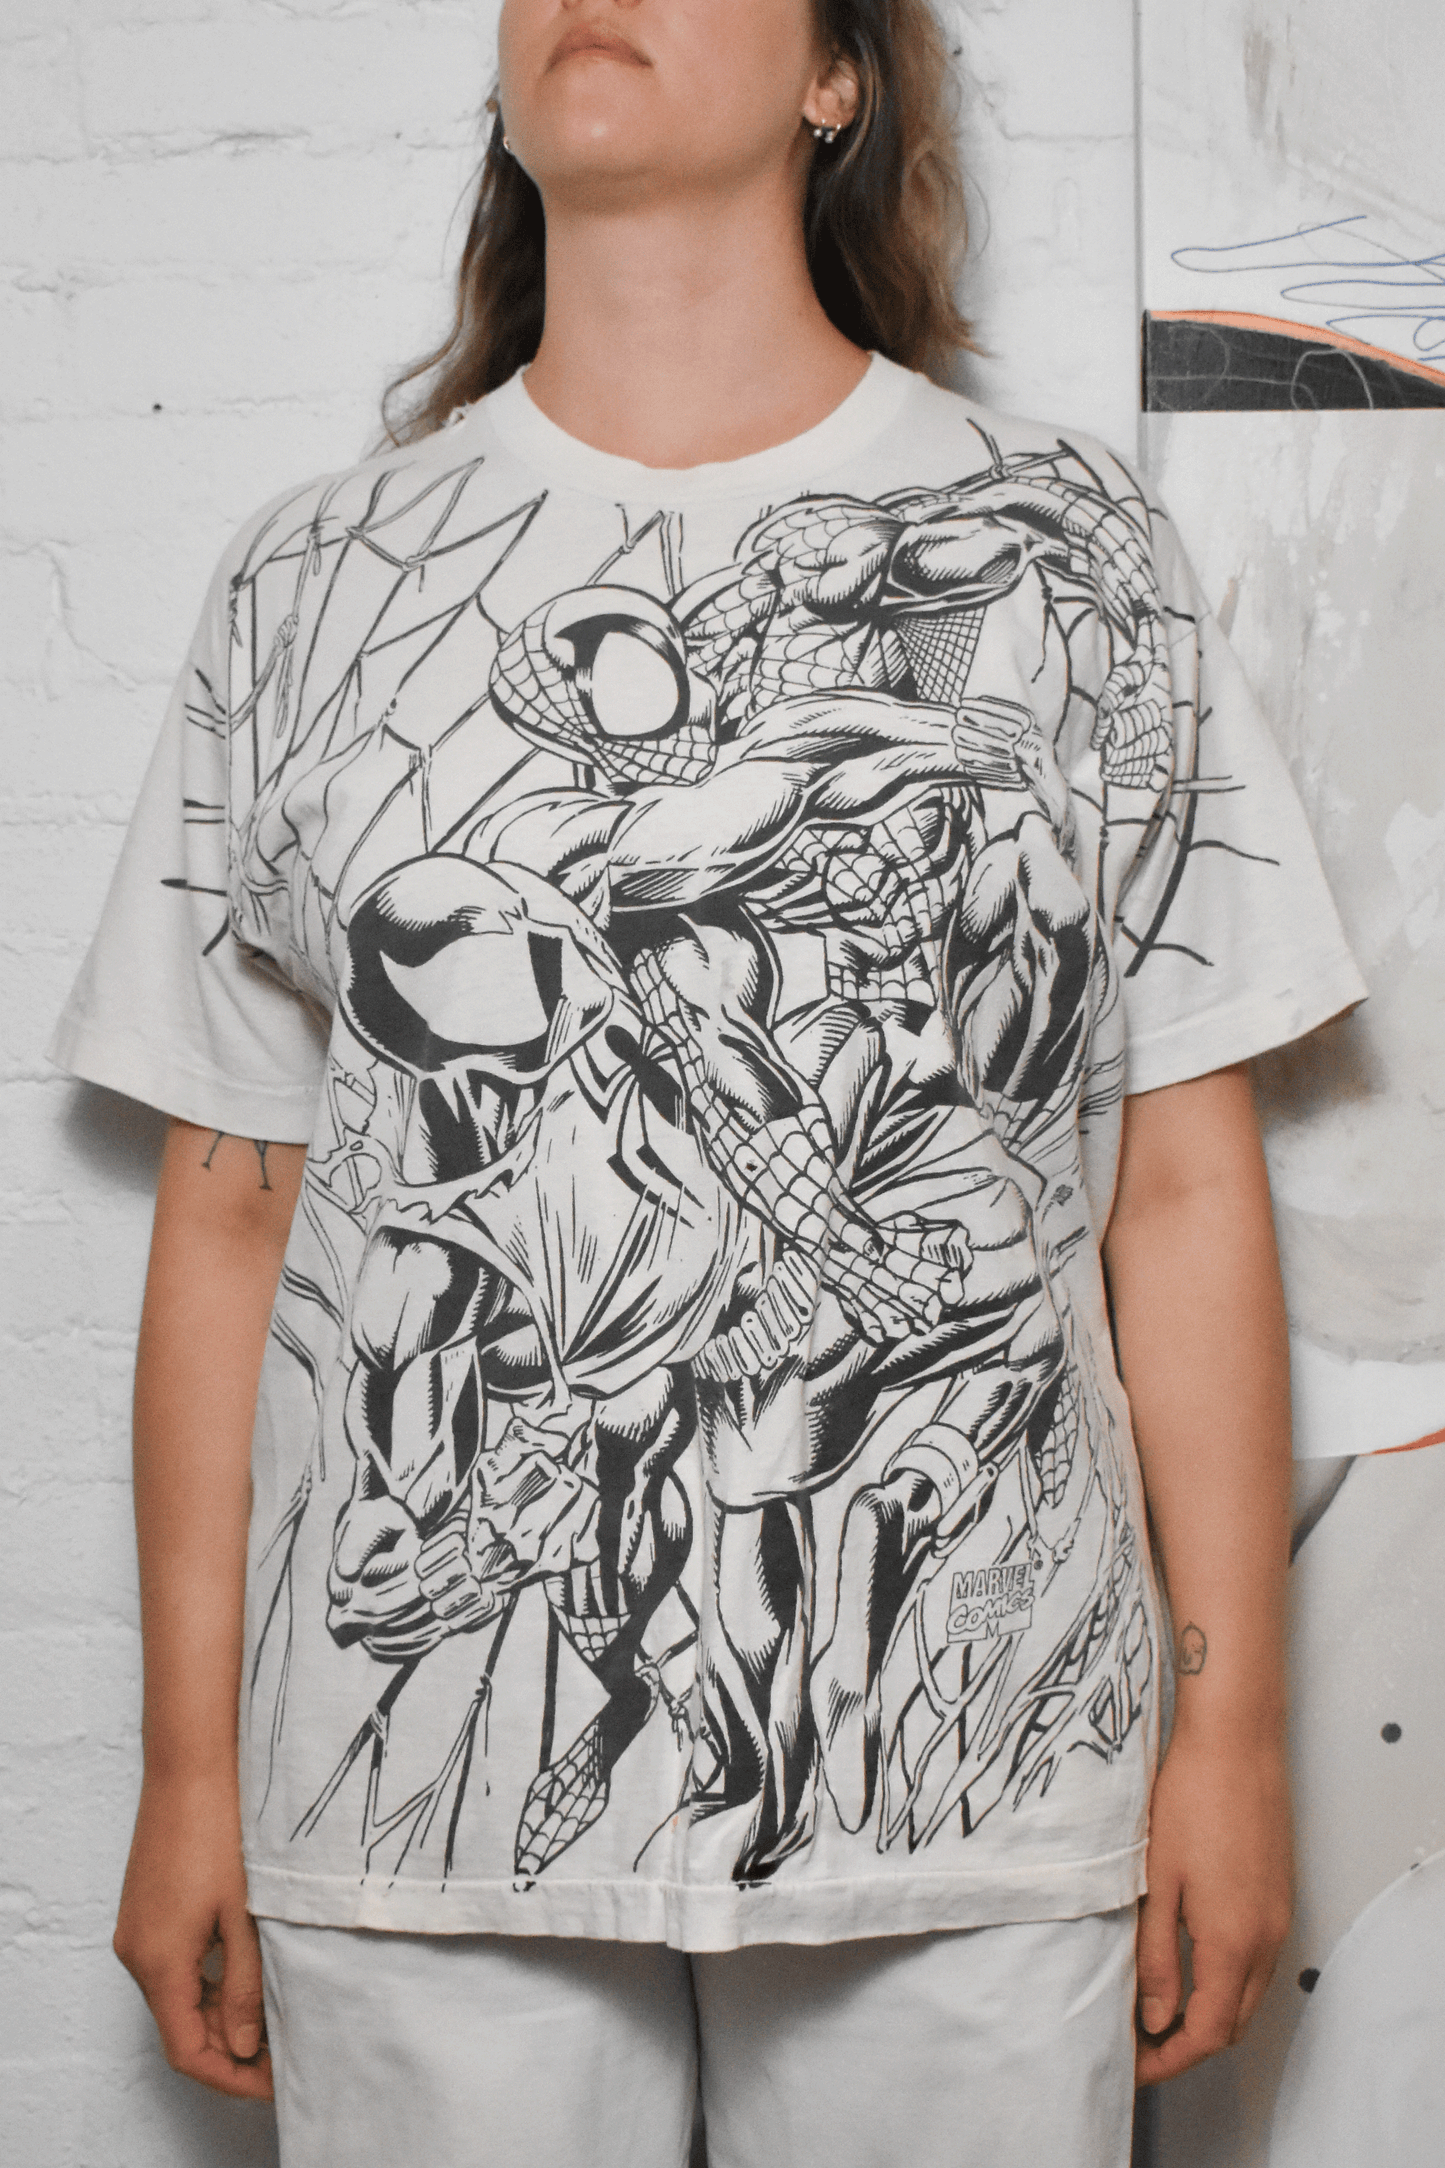 Vintage 1990s "Spiderman vs Scarlet Spiderman" All Over Print T-shirt